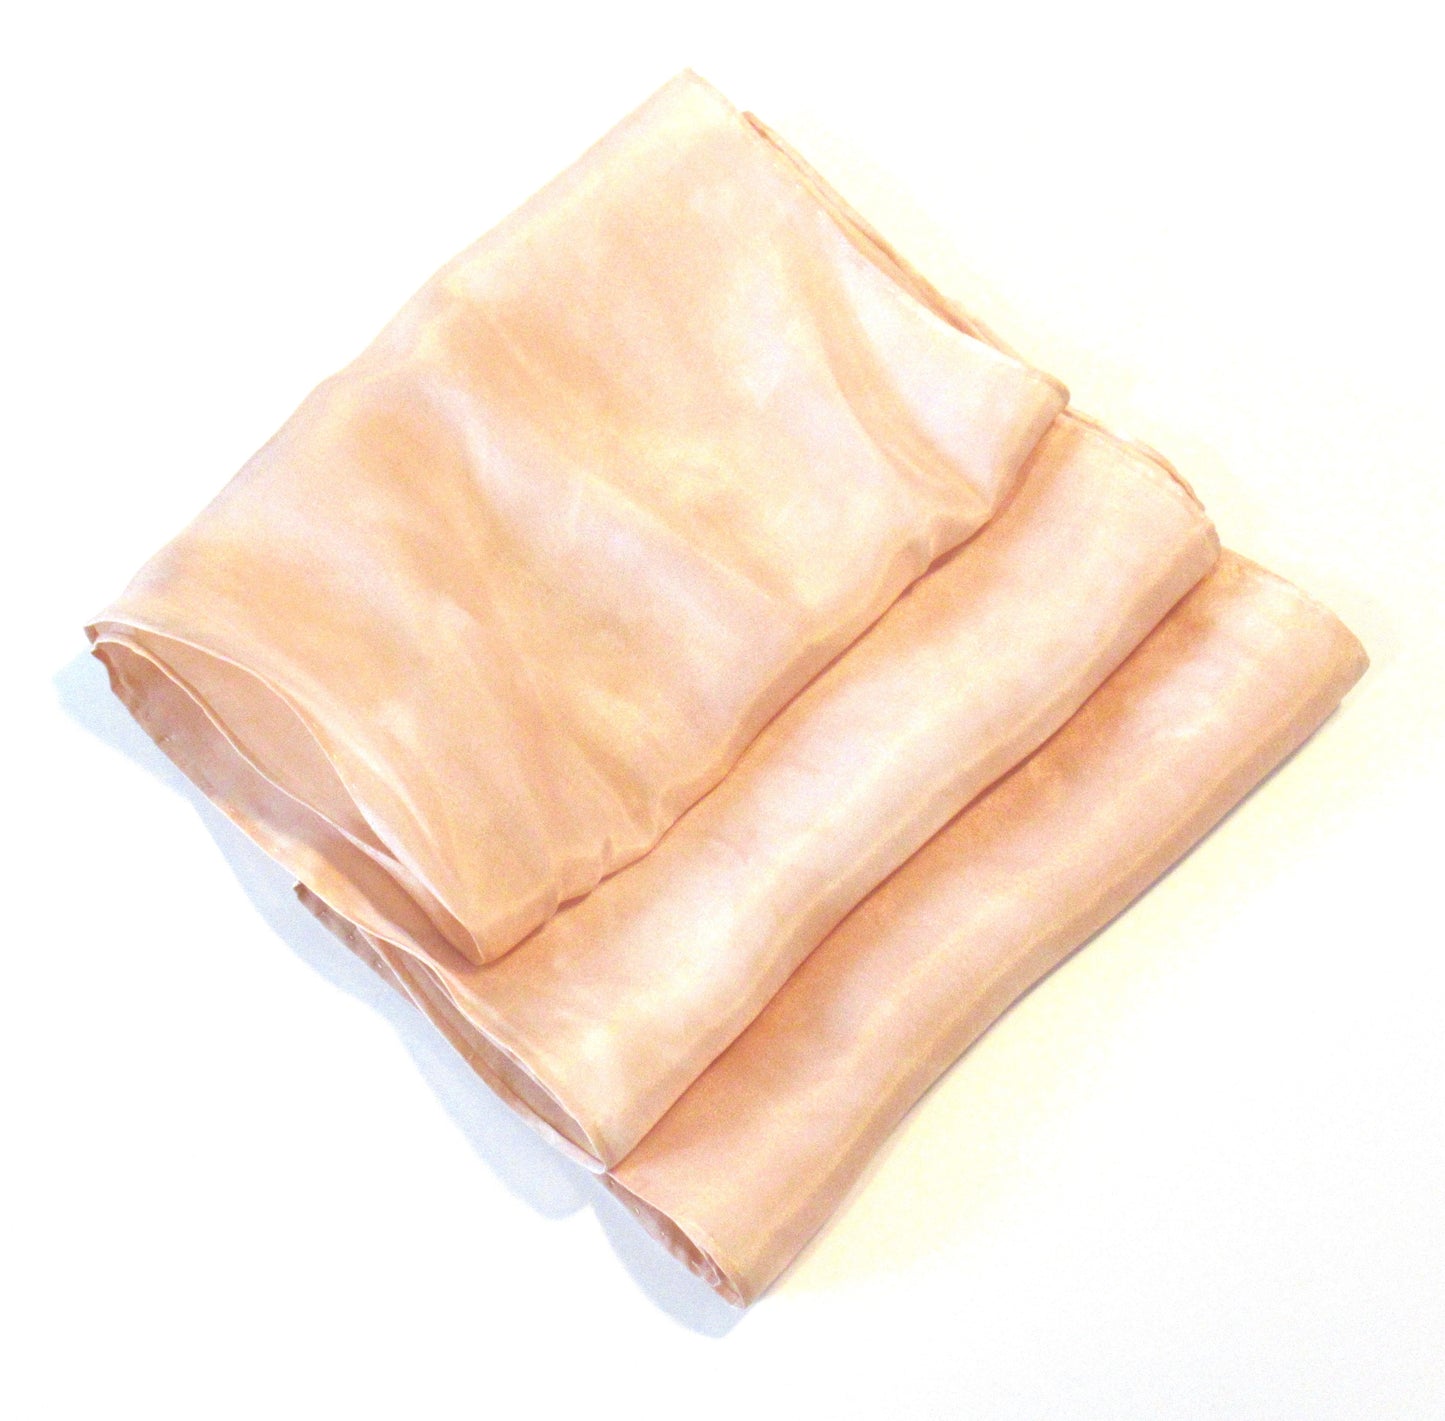 Scarf / Silk - Rose Petal Hand Dyed Silk Scarf - Natural Dyed Silk Scarf - Marbled Blush Pink Habotai Silk Scarf (Relax & Refresh) 115